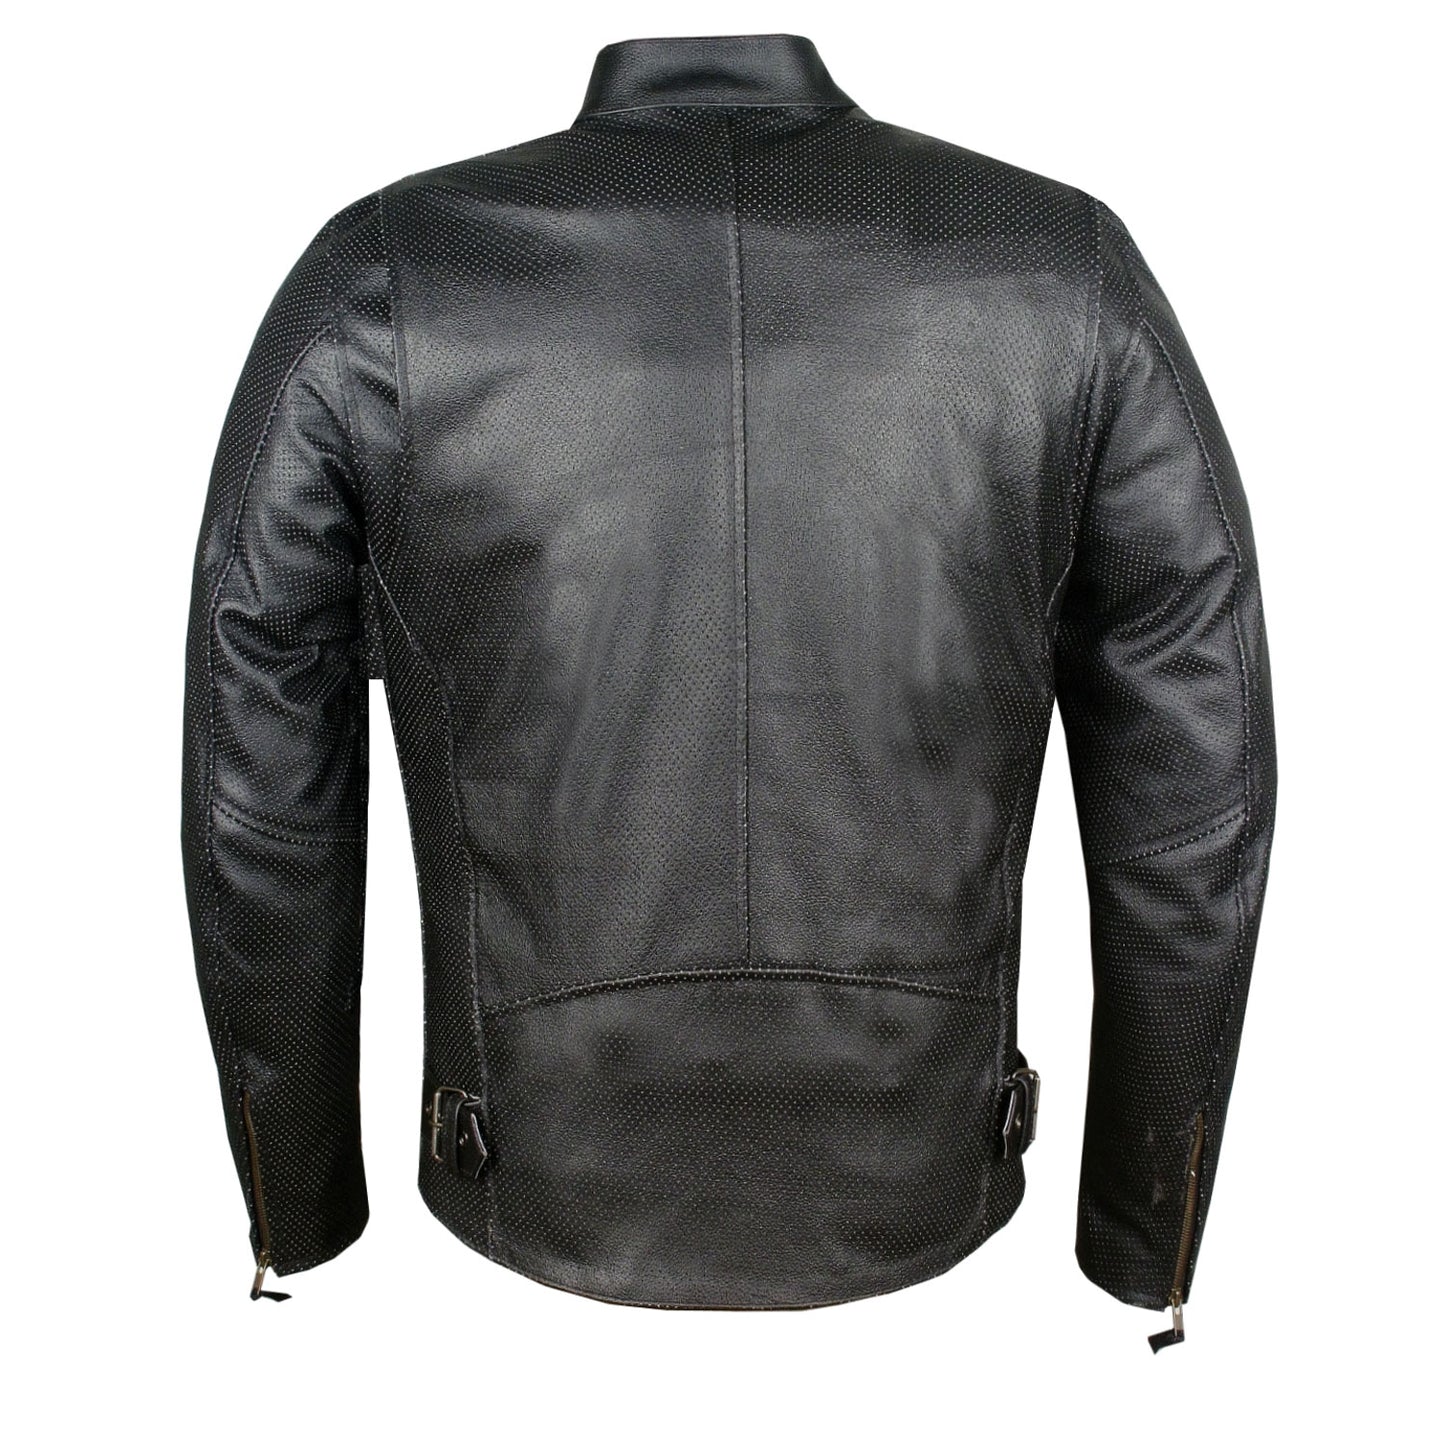 Men's Infinity Airflow Perforated Leather Motorcycle Armor Biker Jacket